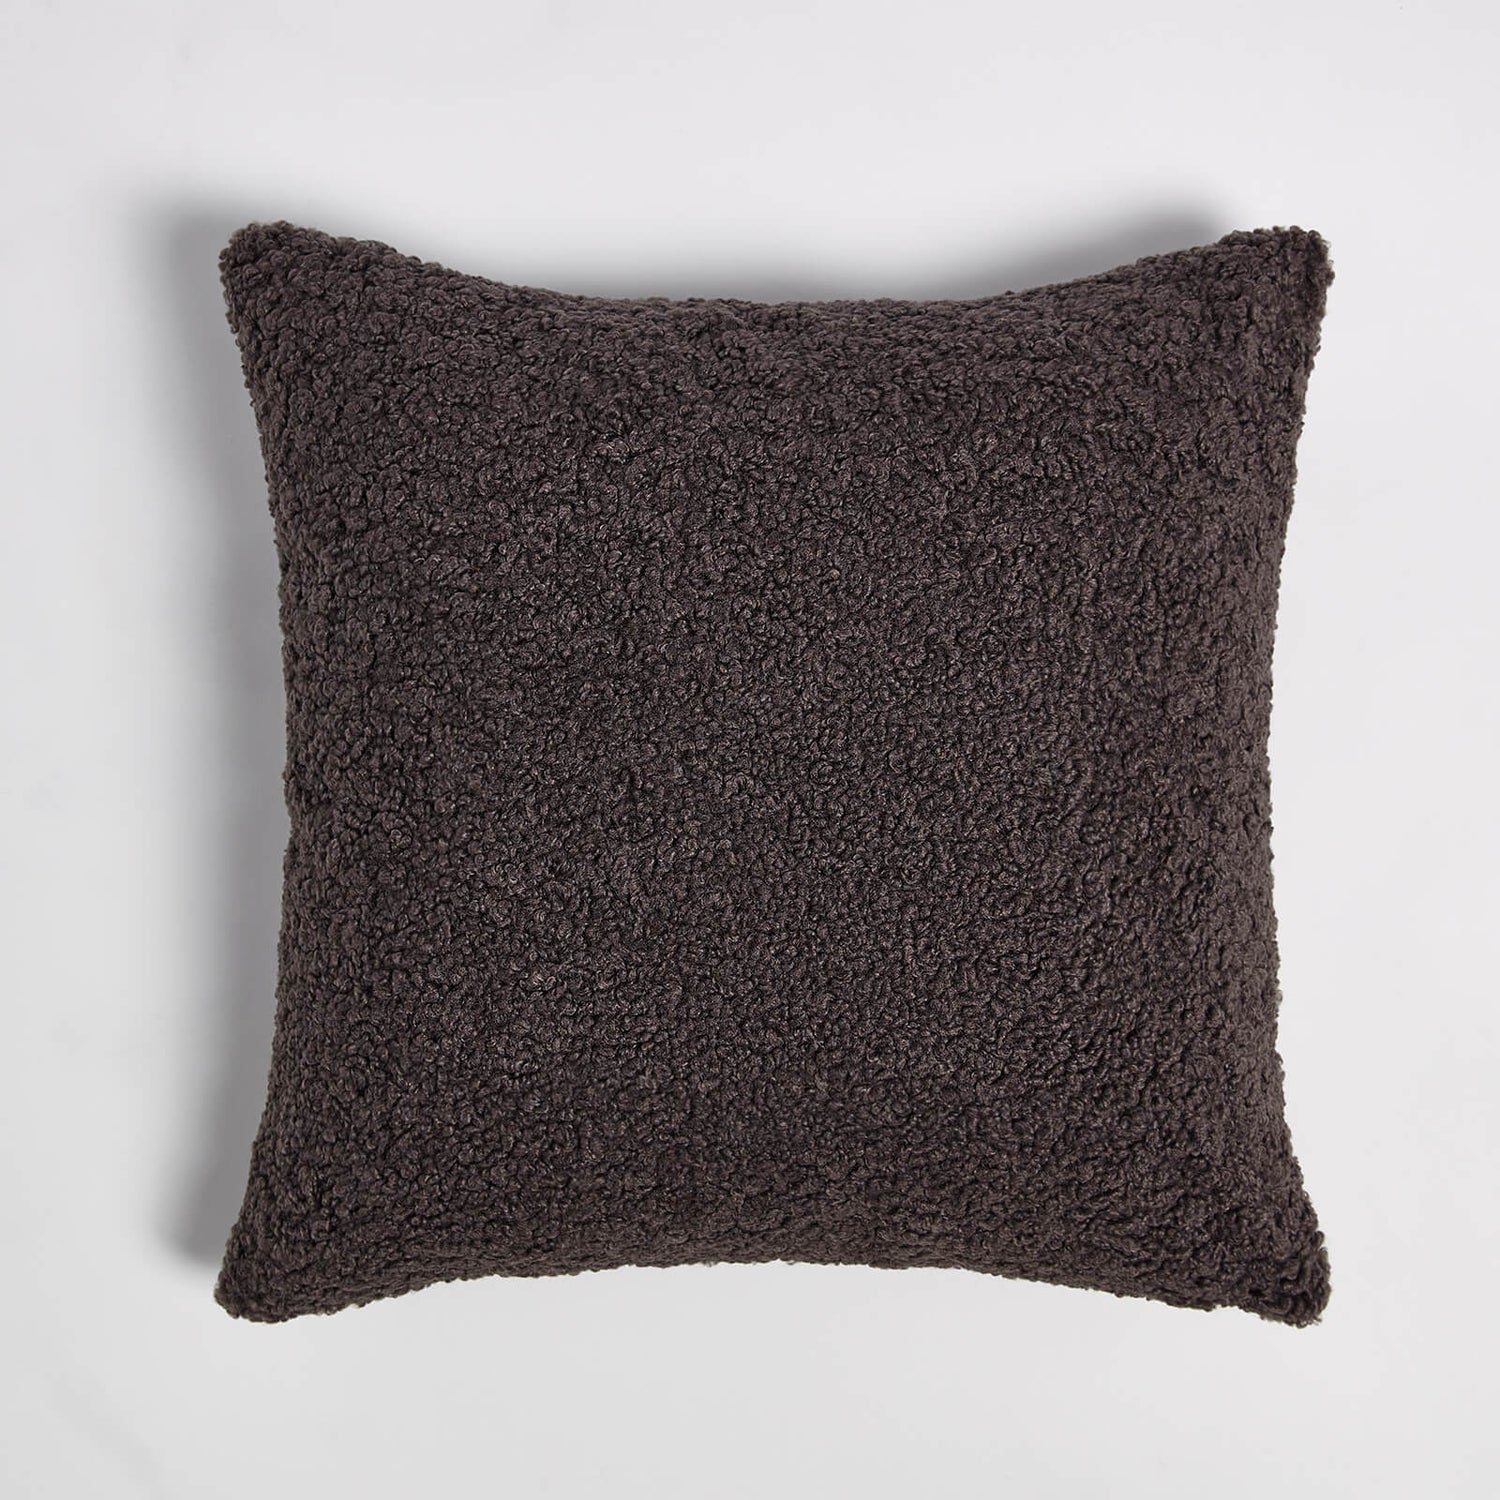 ïn home Faux Sheep Skin Cushion - Charcoal - 50x50cm